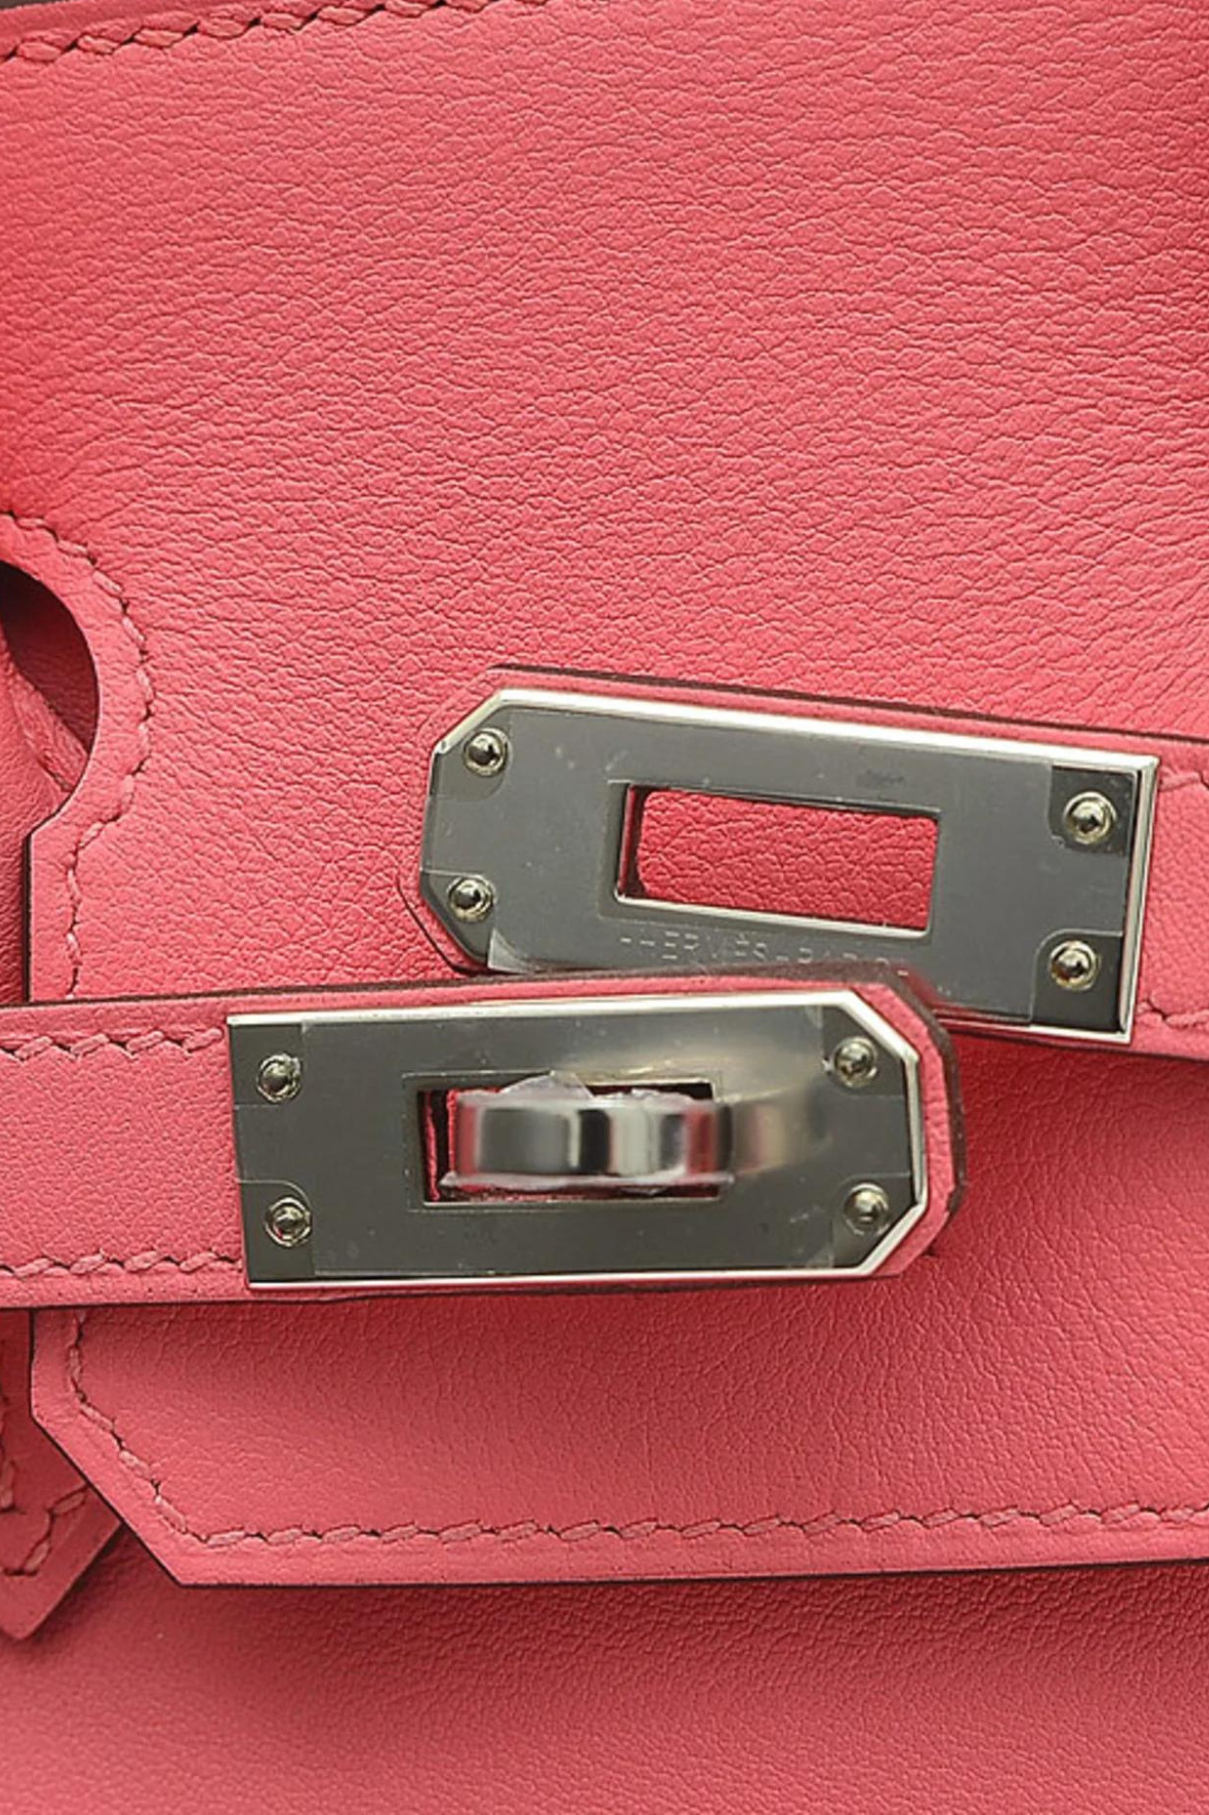 Birkin 25 Rose Azalee Colour in Swift leather with palladium hardware.  Hermès. 2019., Handbags and Accessories Online, Ecommerce Retail